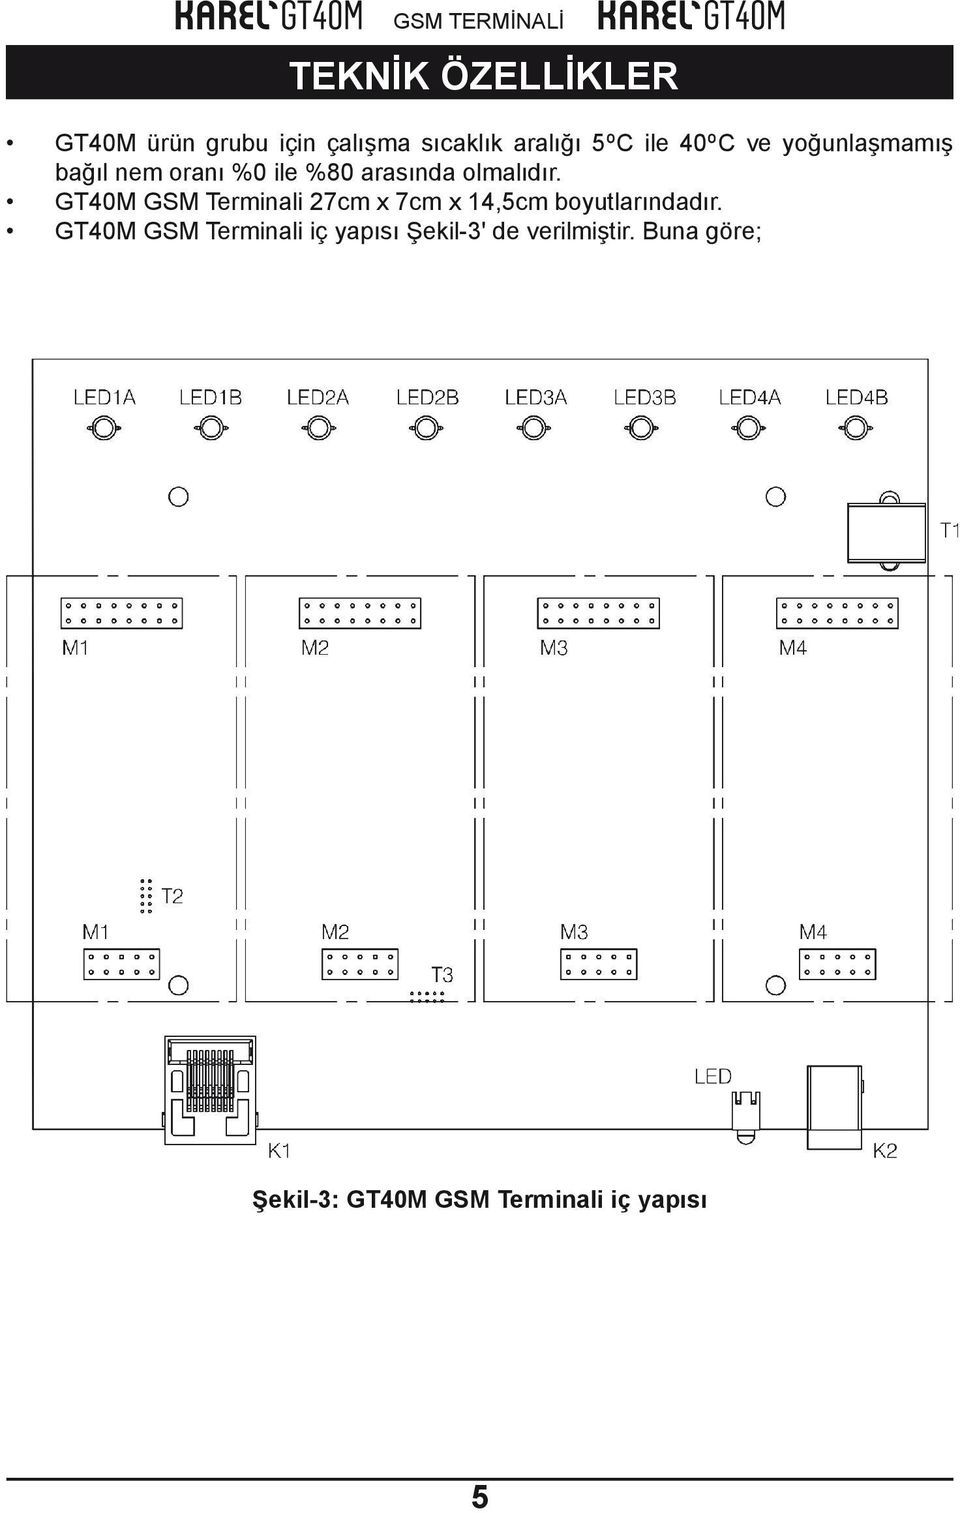 GT40M GSM Terminali 27cm x 7cm x 14,5cm boyutlarındadır.